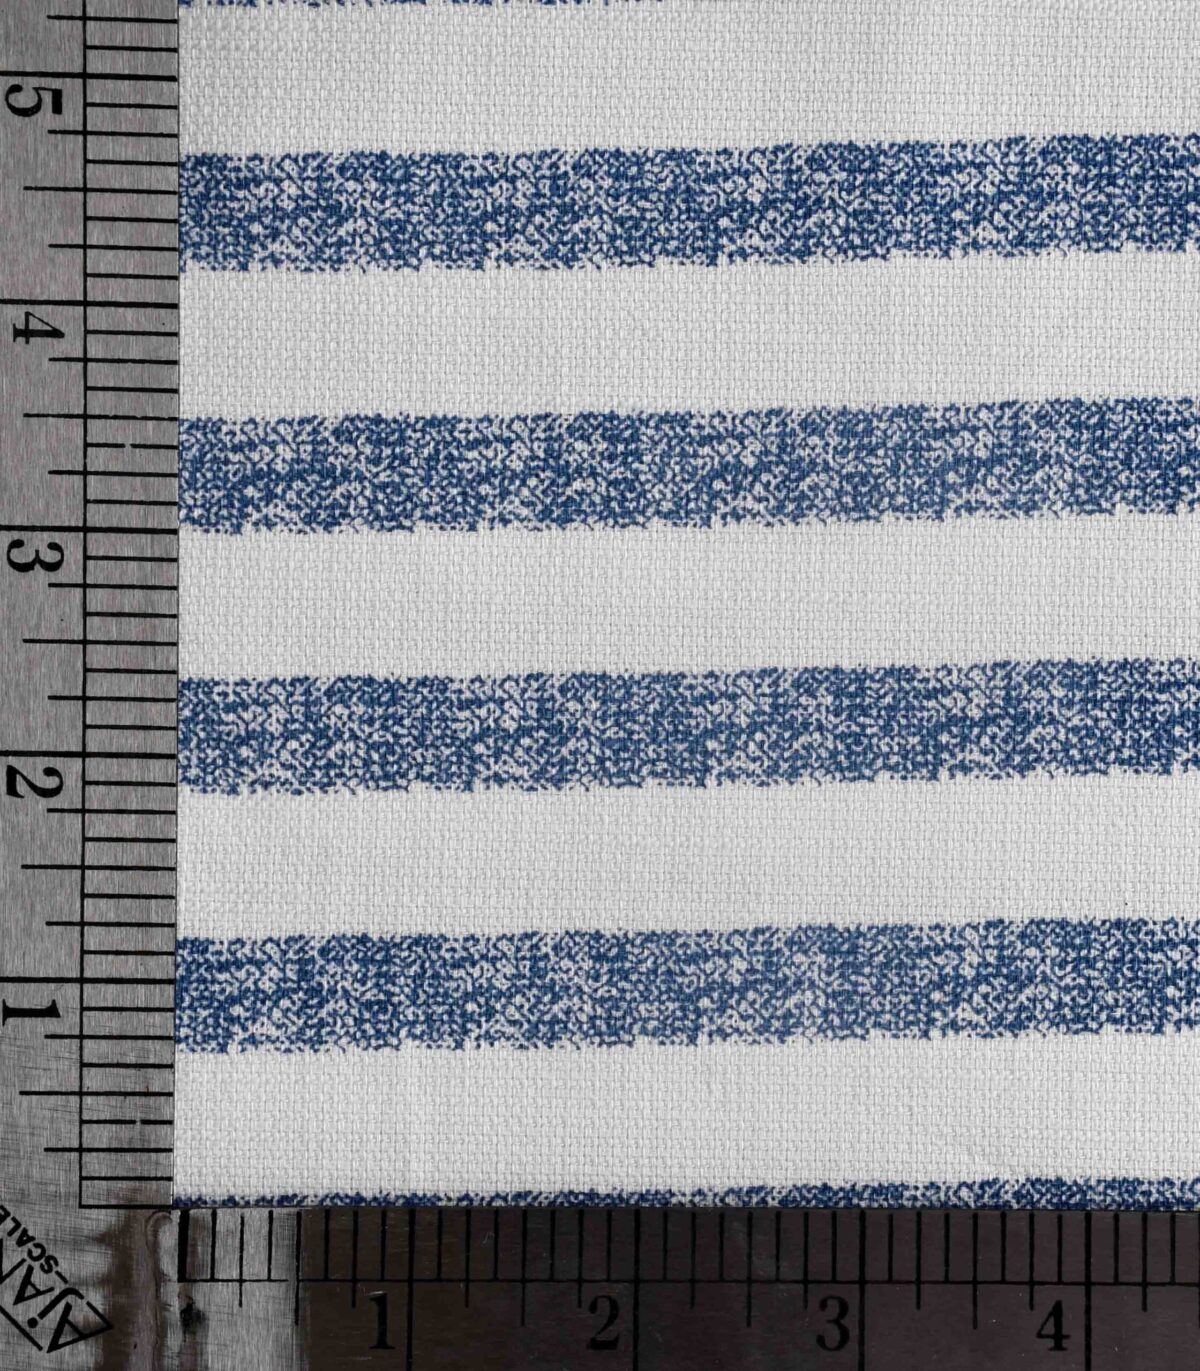 Weft Stripe Print Cotton Fabric